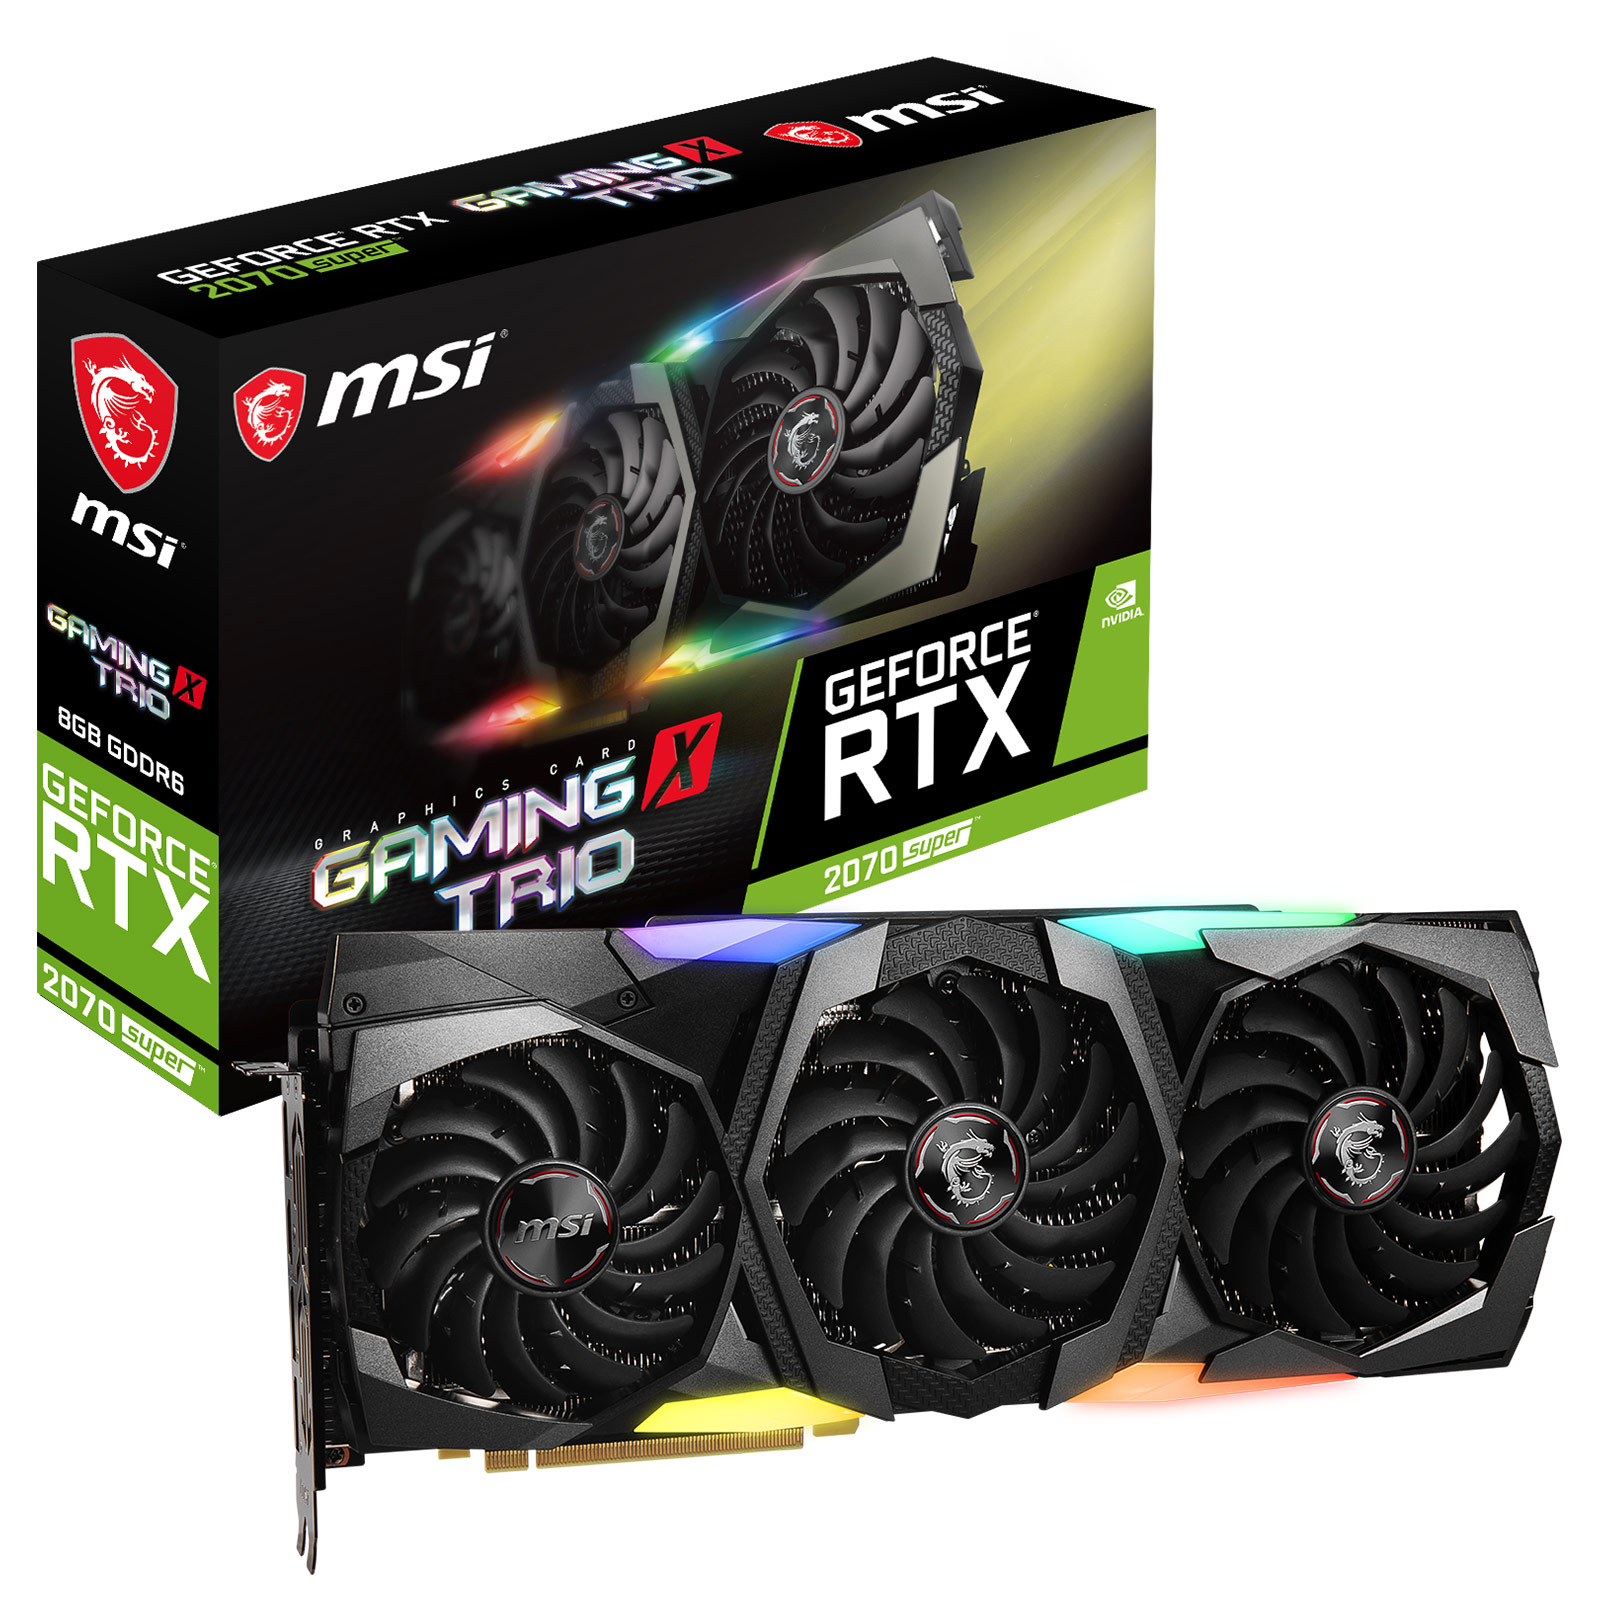 MSI GeForce RTX 2070 SUPER GAMING X TRIO (GEFORCE RTX 2070 SUPER GAMING